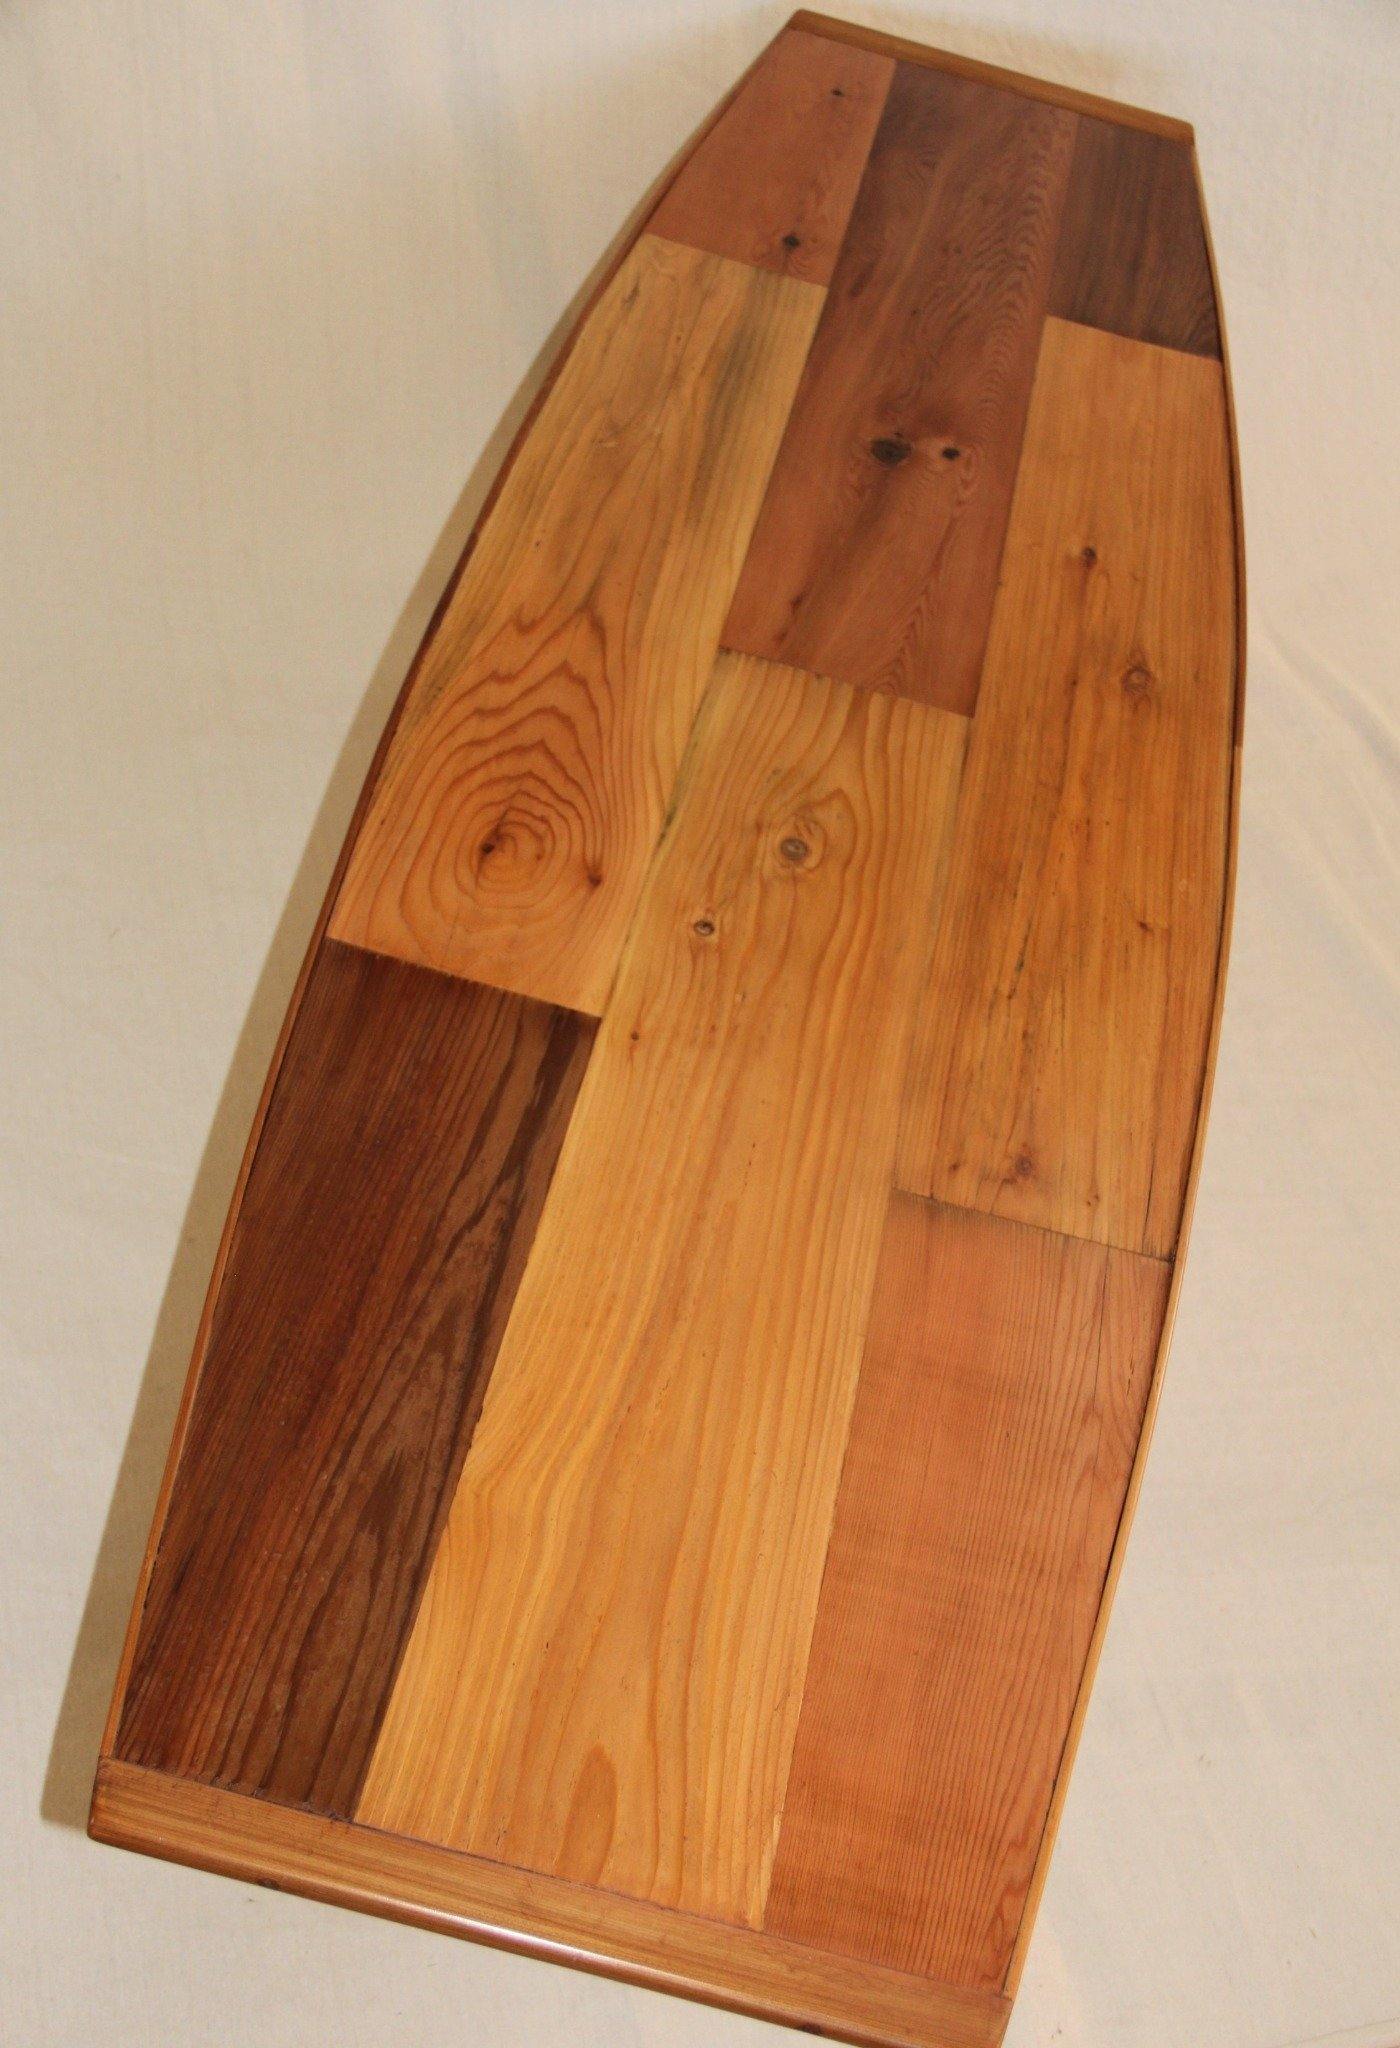 Birds eye view showcaisng reclaimed cedar of Surfboard style coffee table- Cook Street Vintage